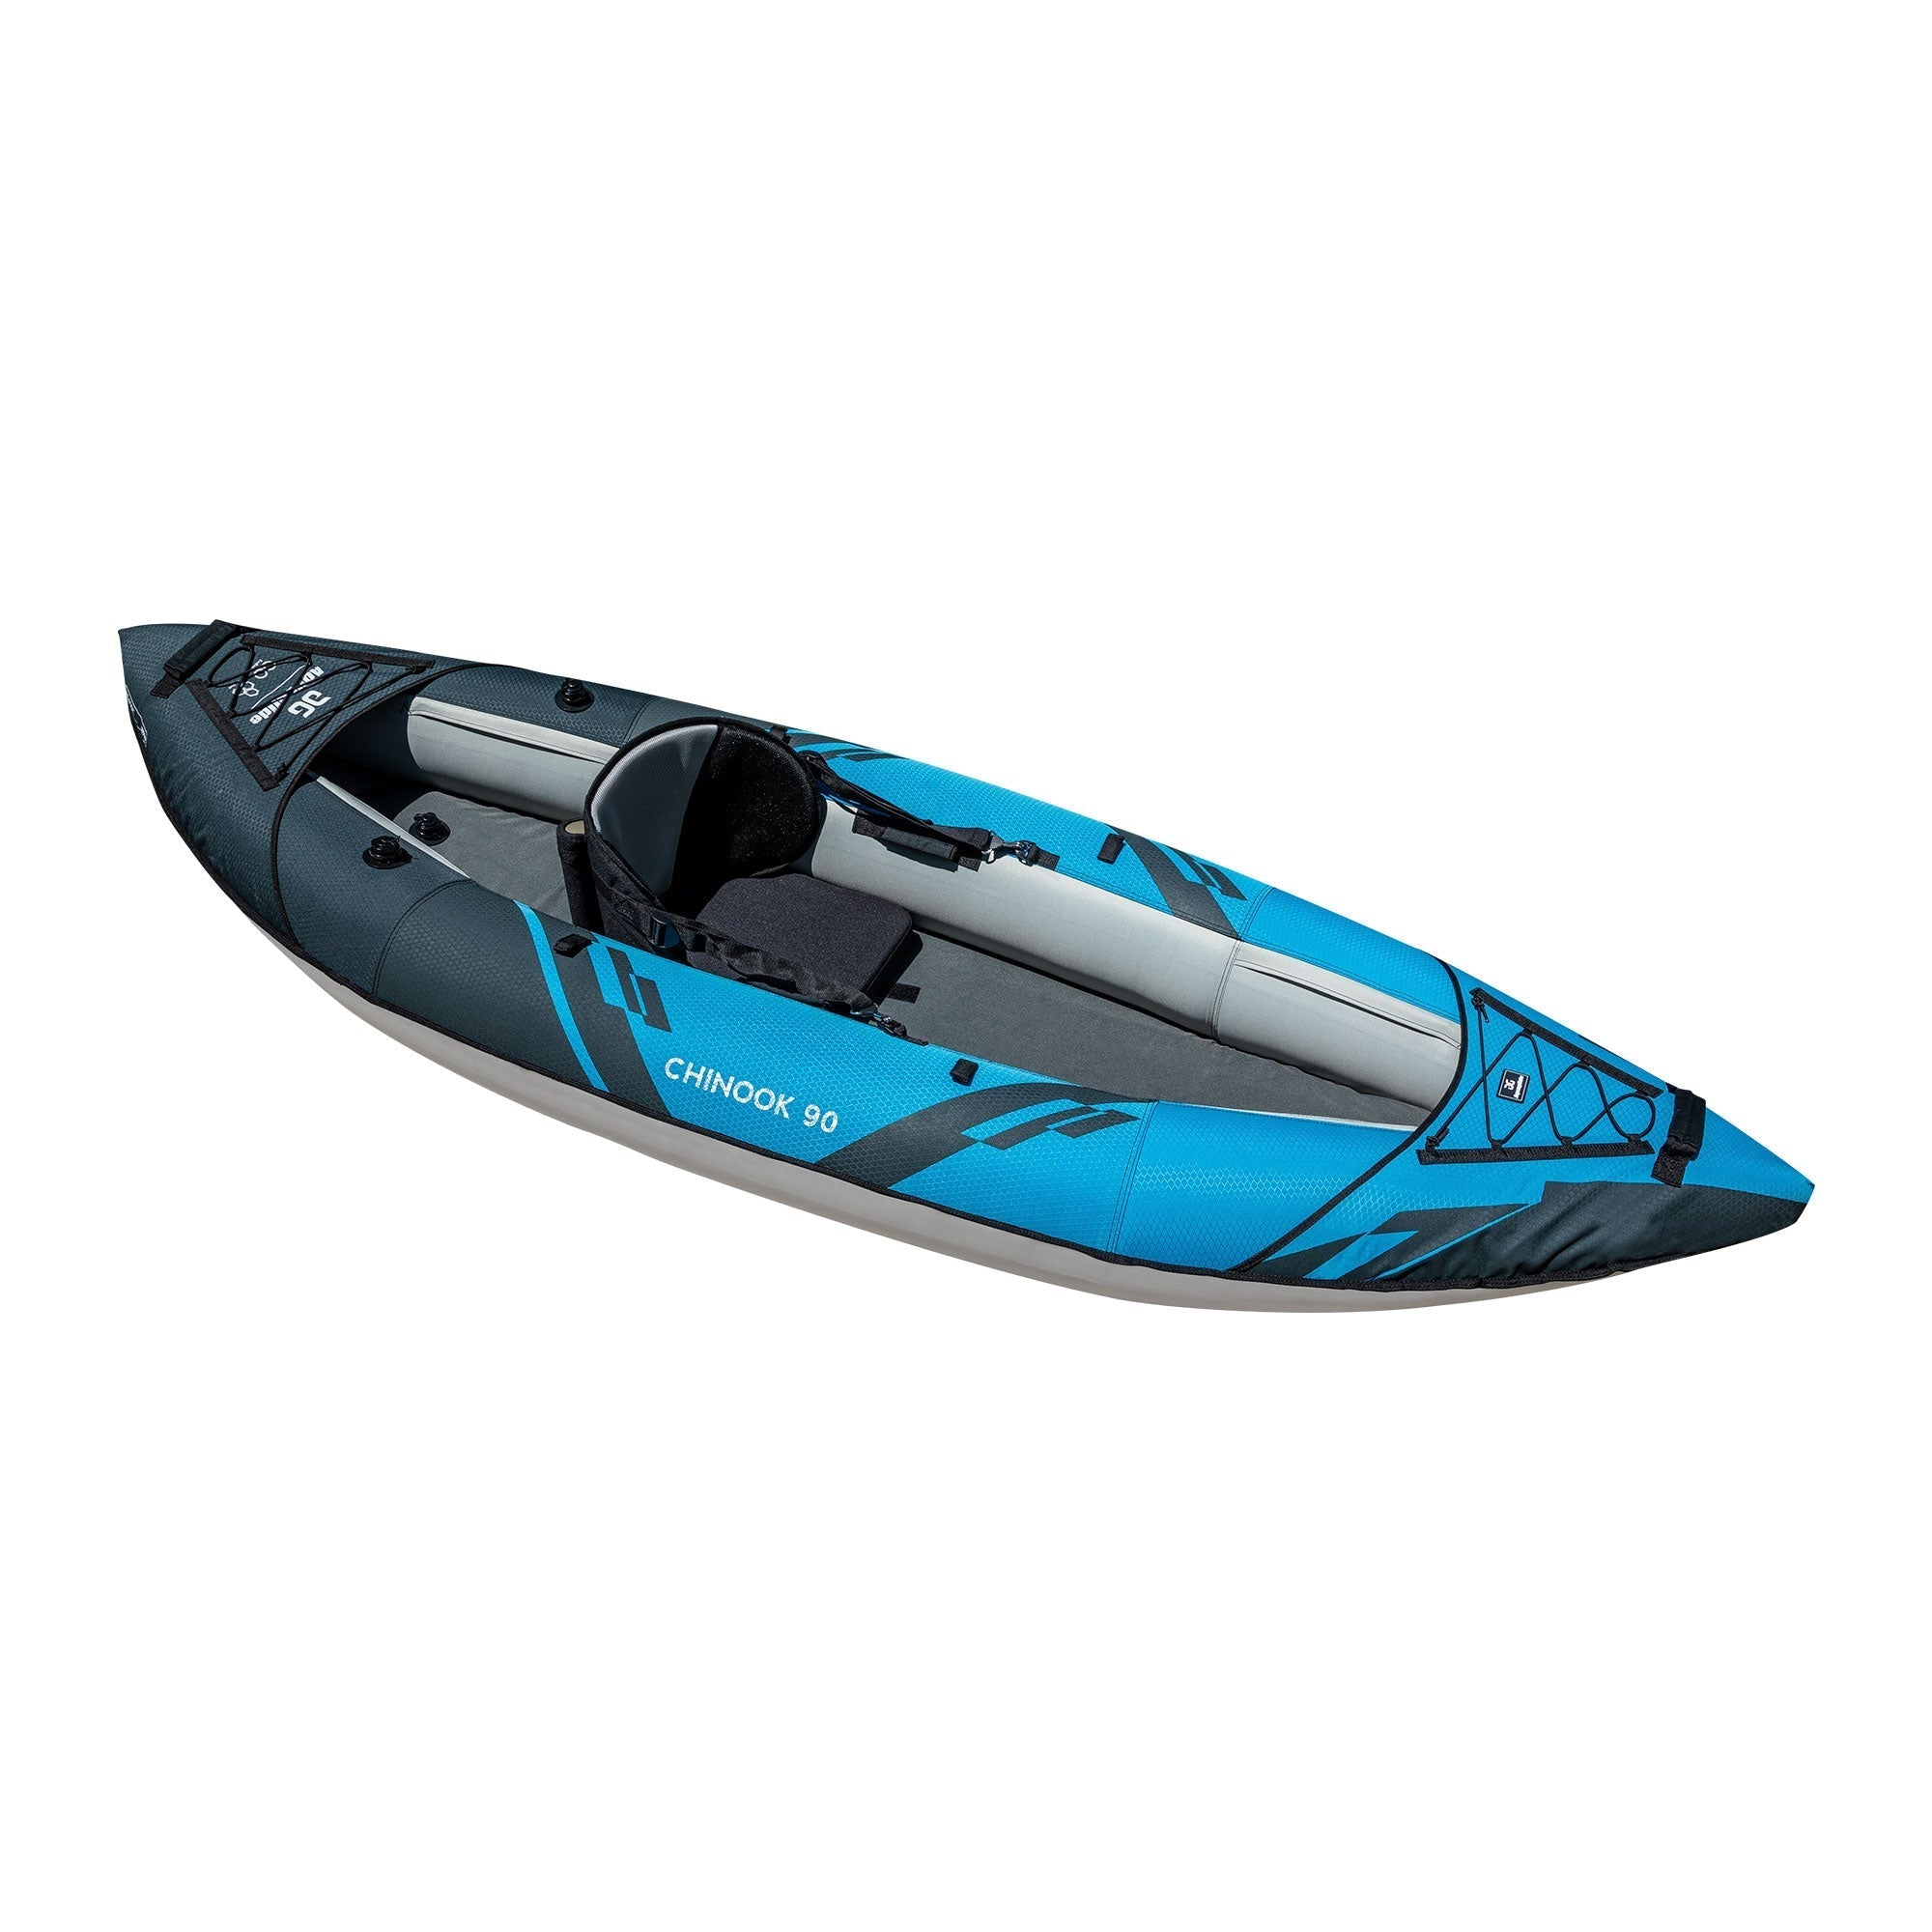 Aquaglide Chinook 90 Inflatable Kayak - Worthing Watersports - Kayaks - Aquaglide